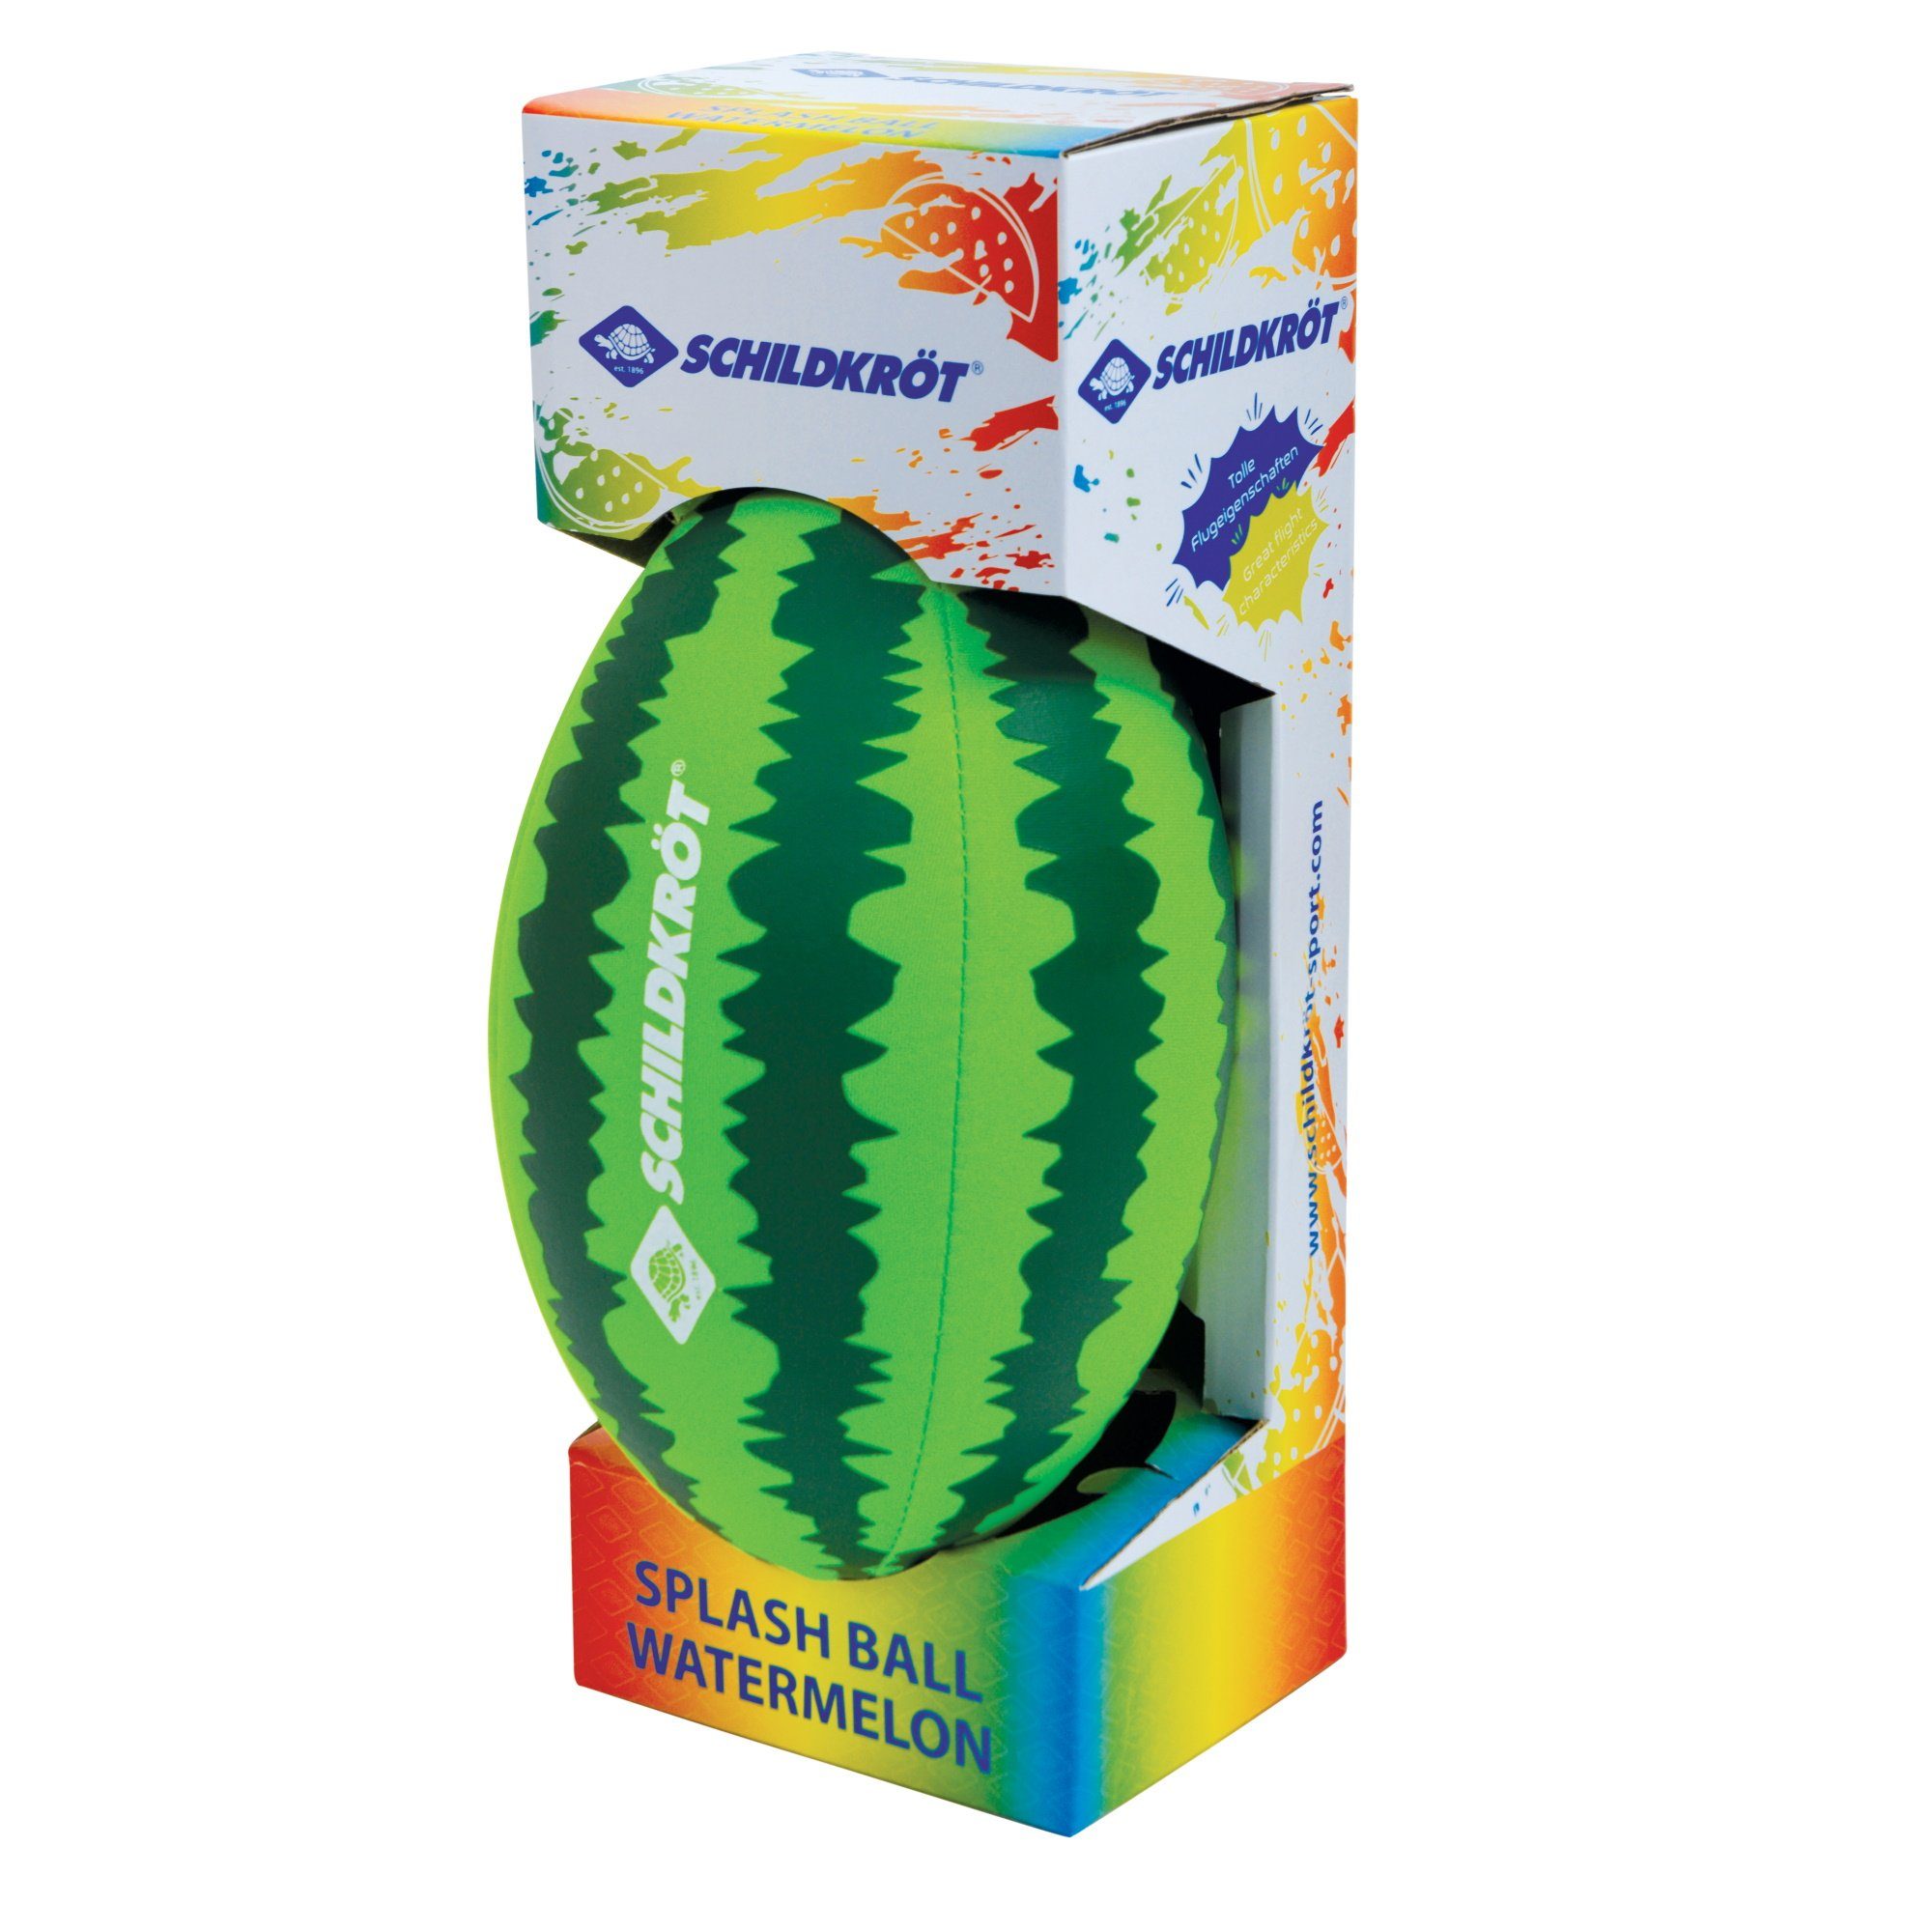 Schildkröt 27cmx17cm, Schildkröt Funsports Ball Splash Funsports Watermelon Spielball Melonenoptik